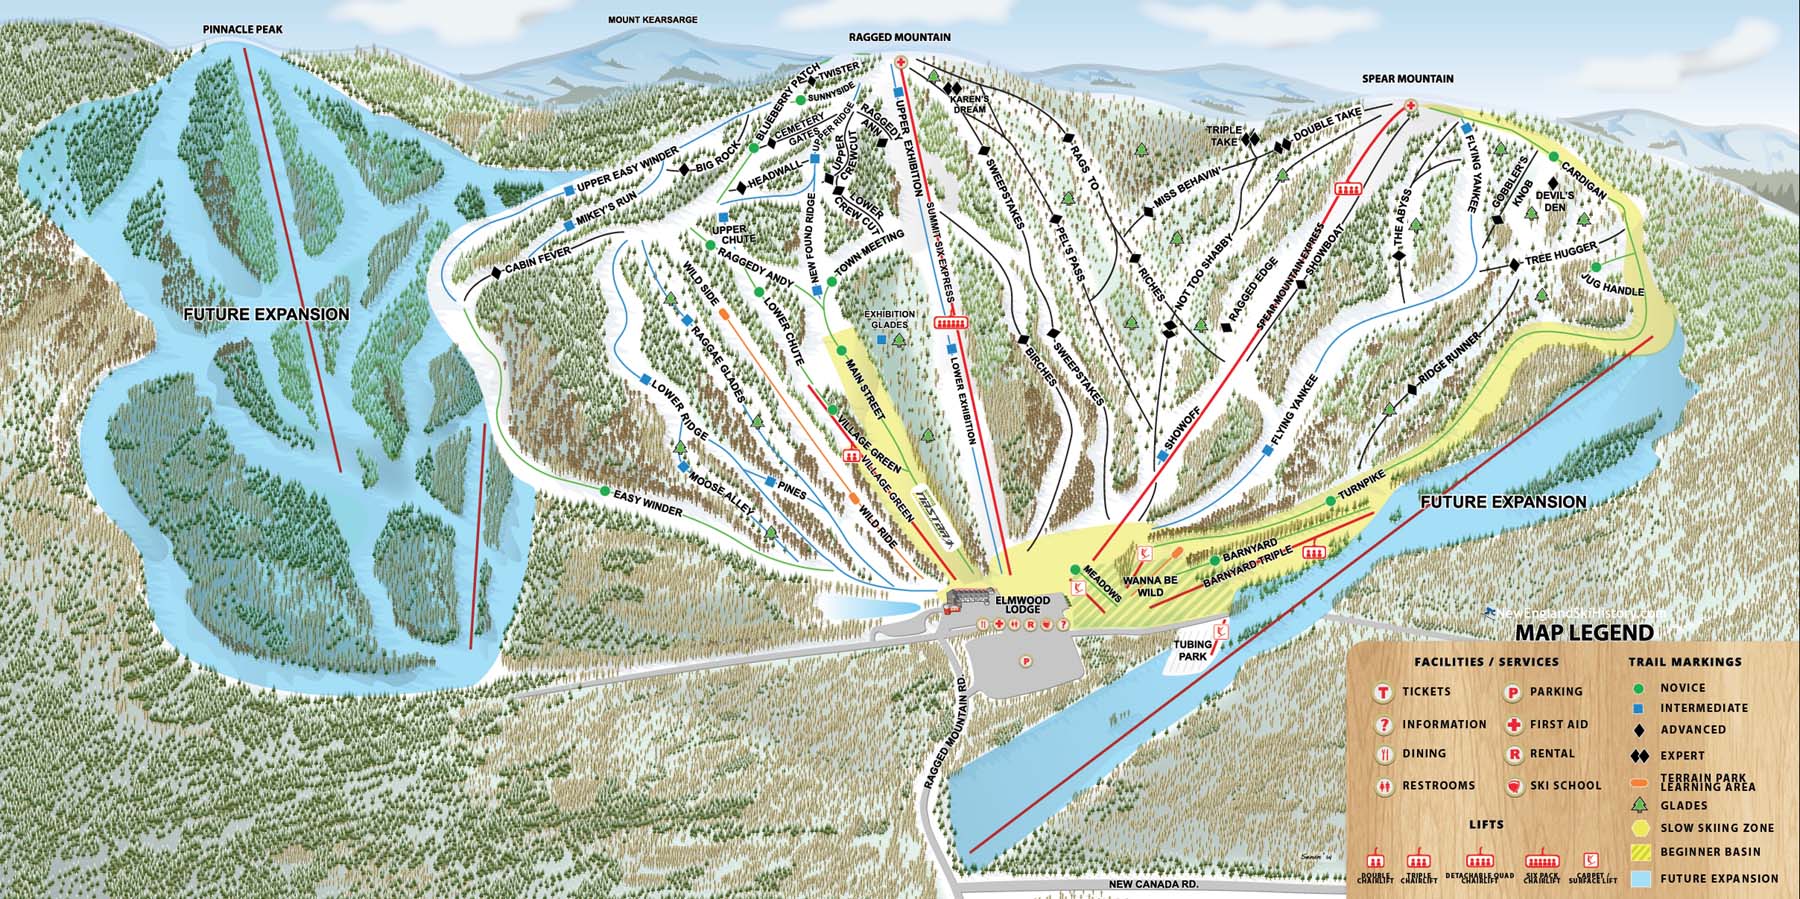 2016-17 Ragged Mountain Trail Map